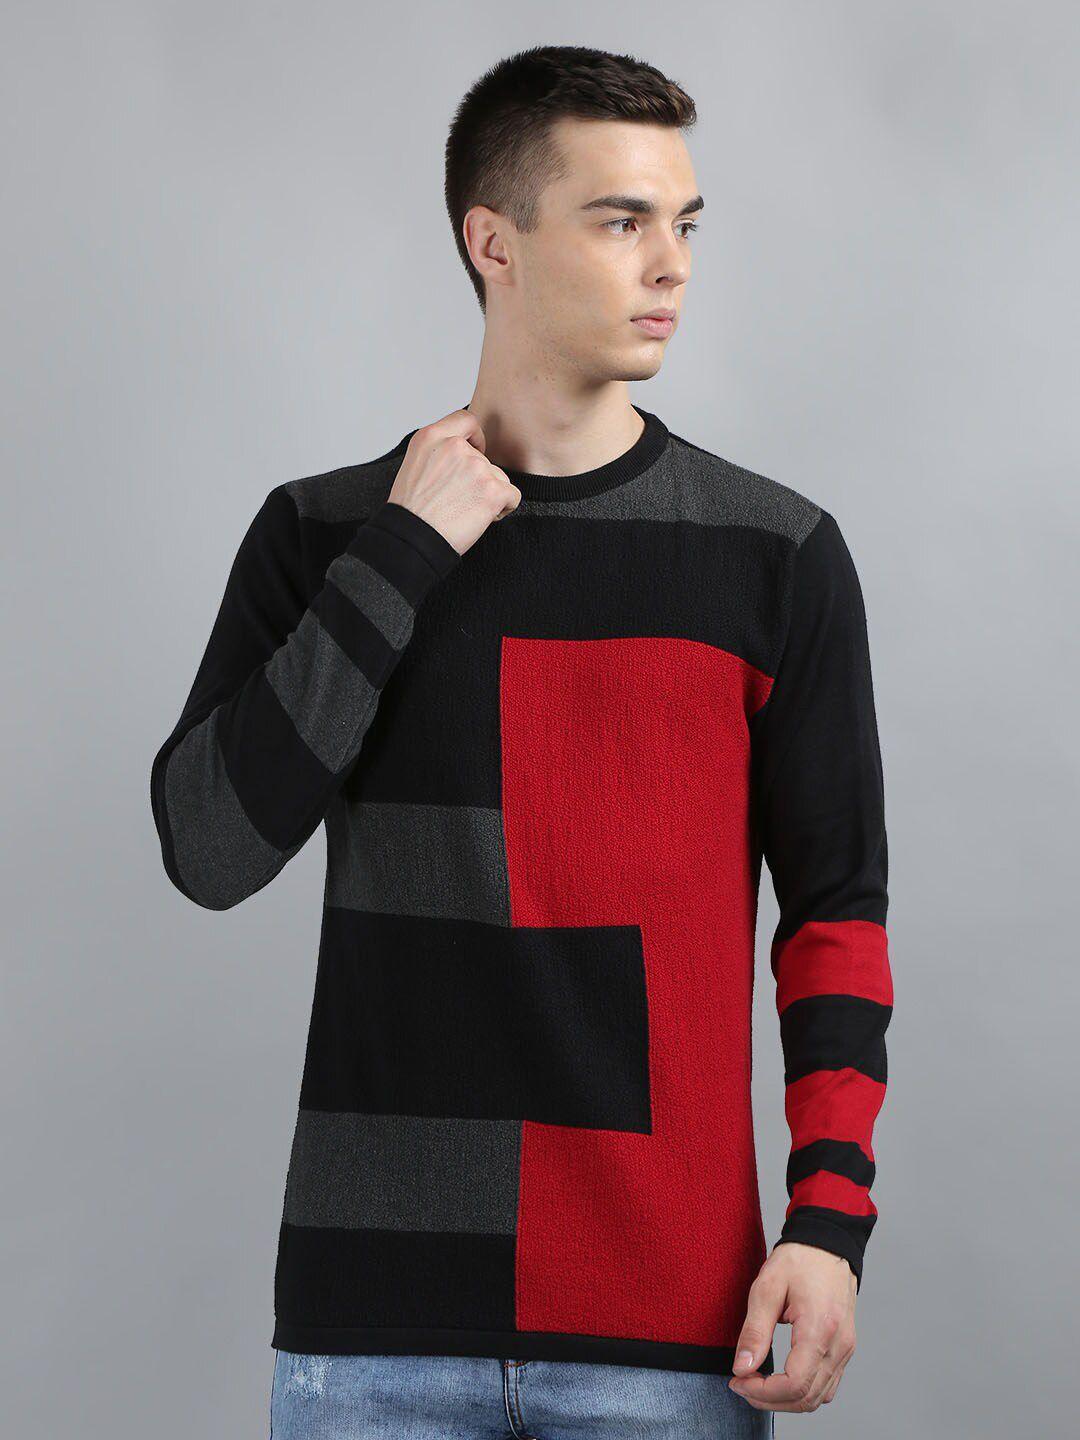 tim paris colourblocked cotton pullover sweater